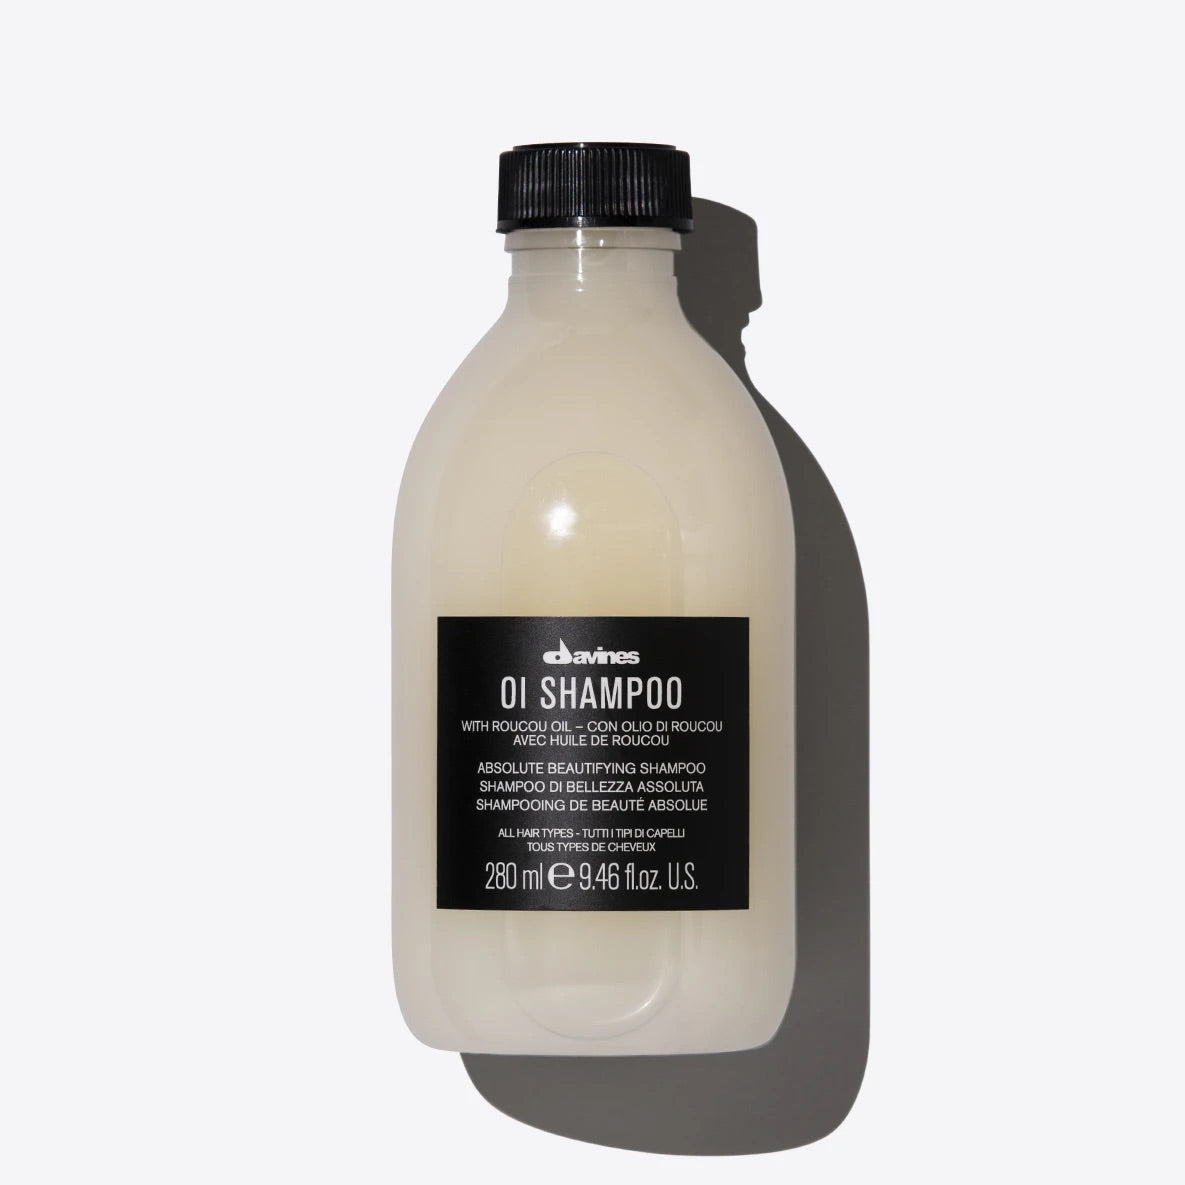 Oi Shampoo | Davines